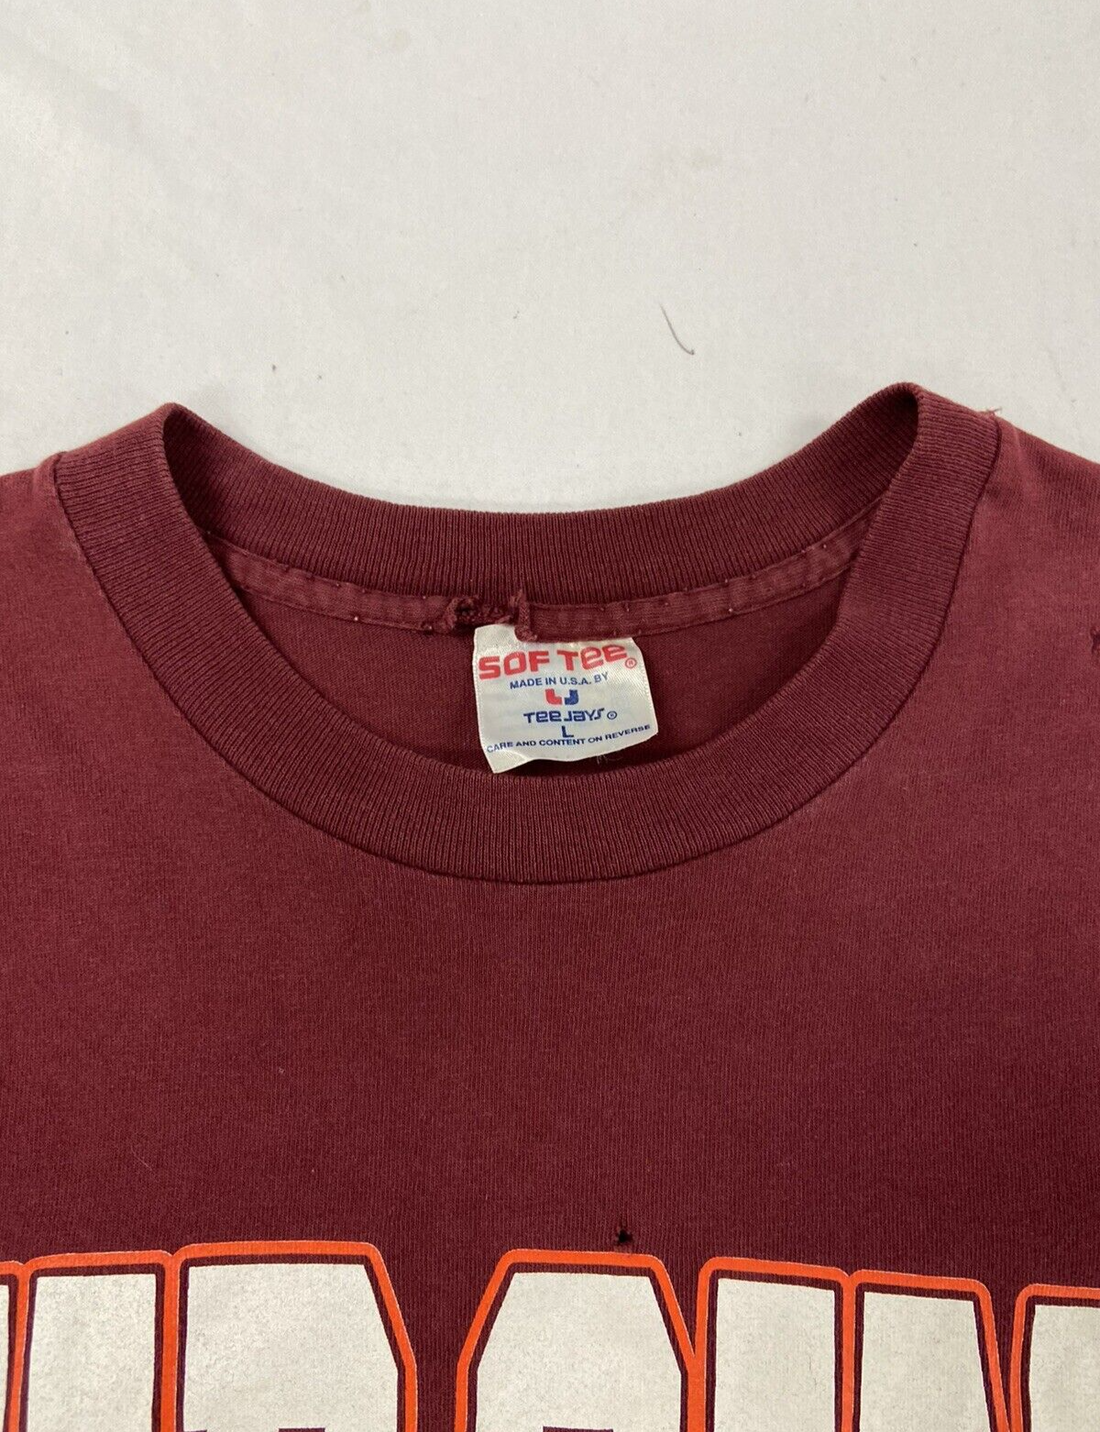 Vintage Virginia Tech Hokies T-Shirt Size Large Red 90s NCAA